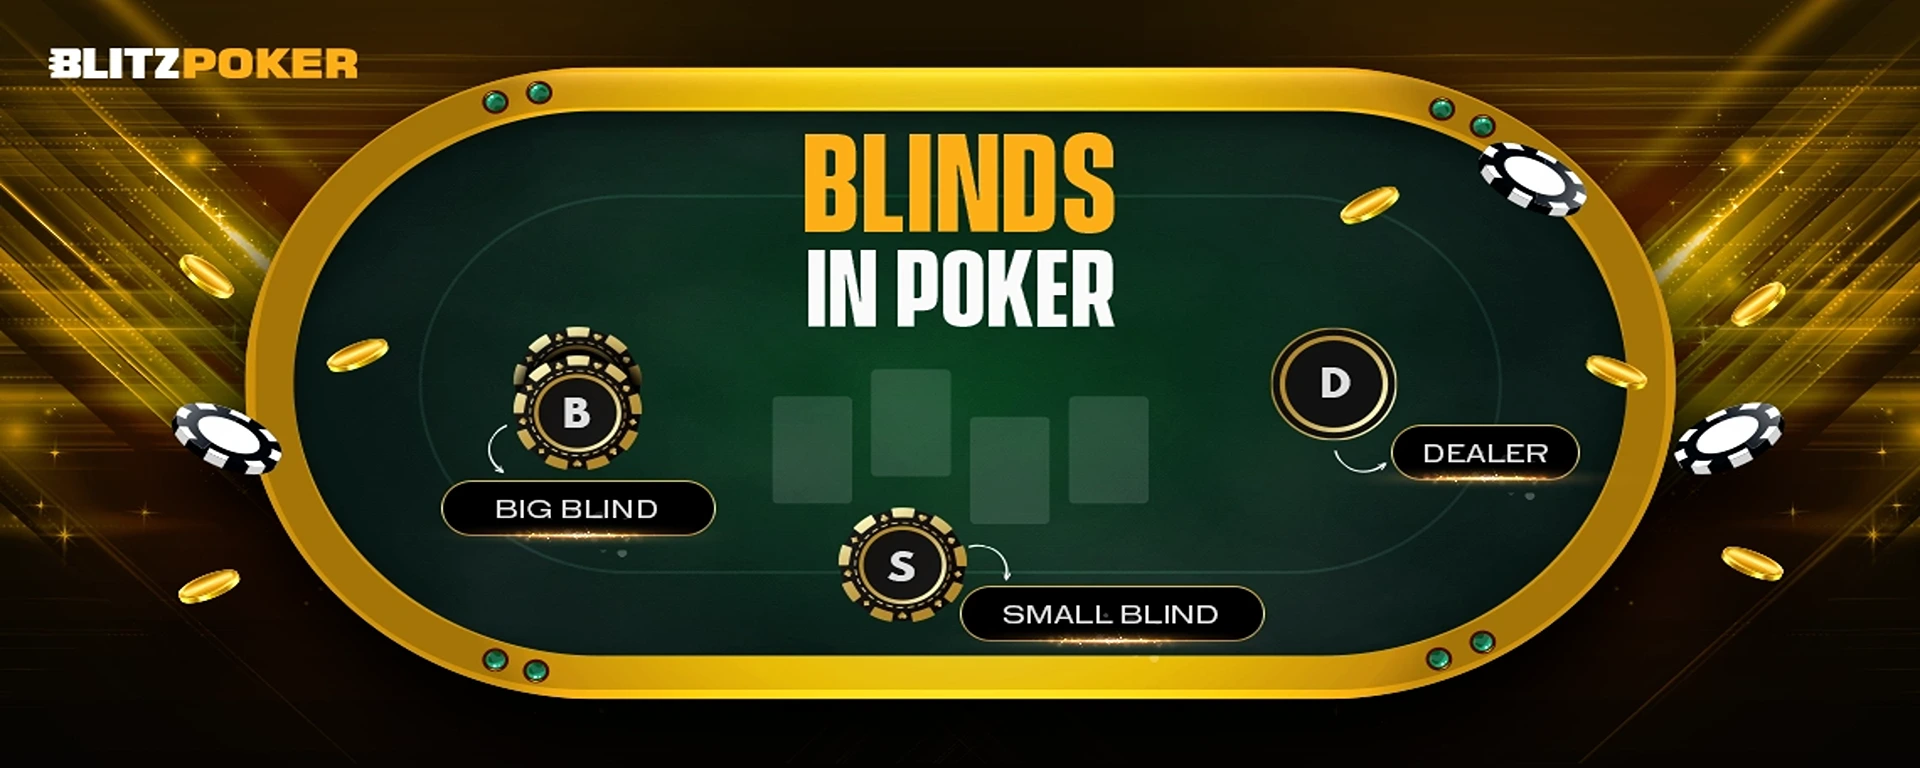 Blind Rules in Poker